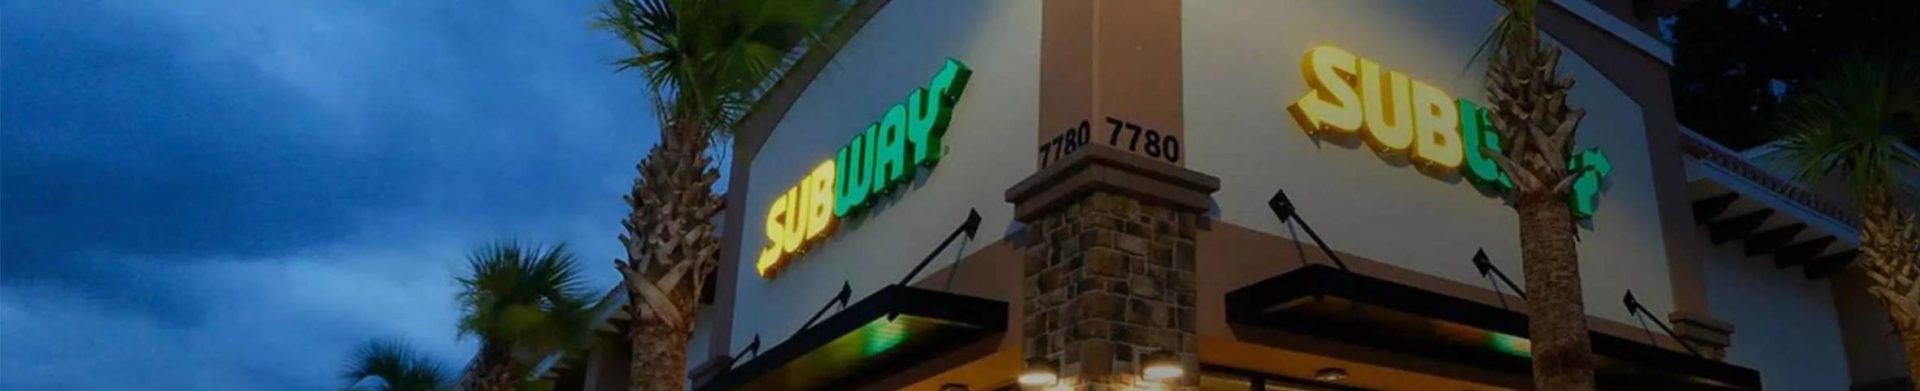 a Subway restaurant